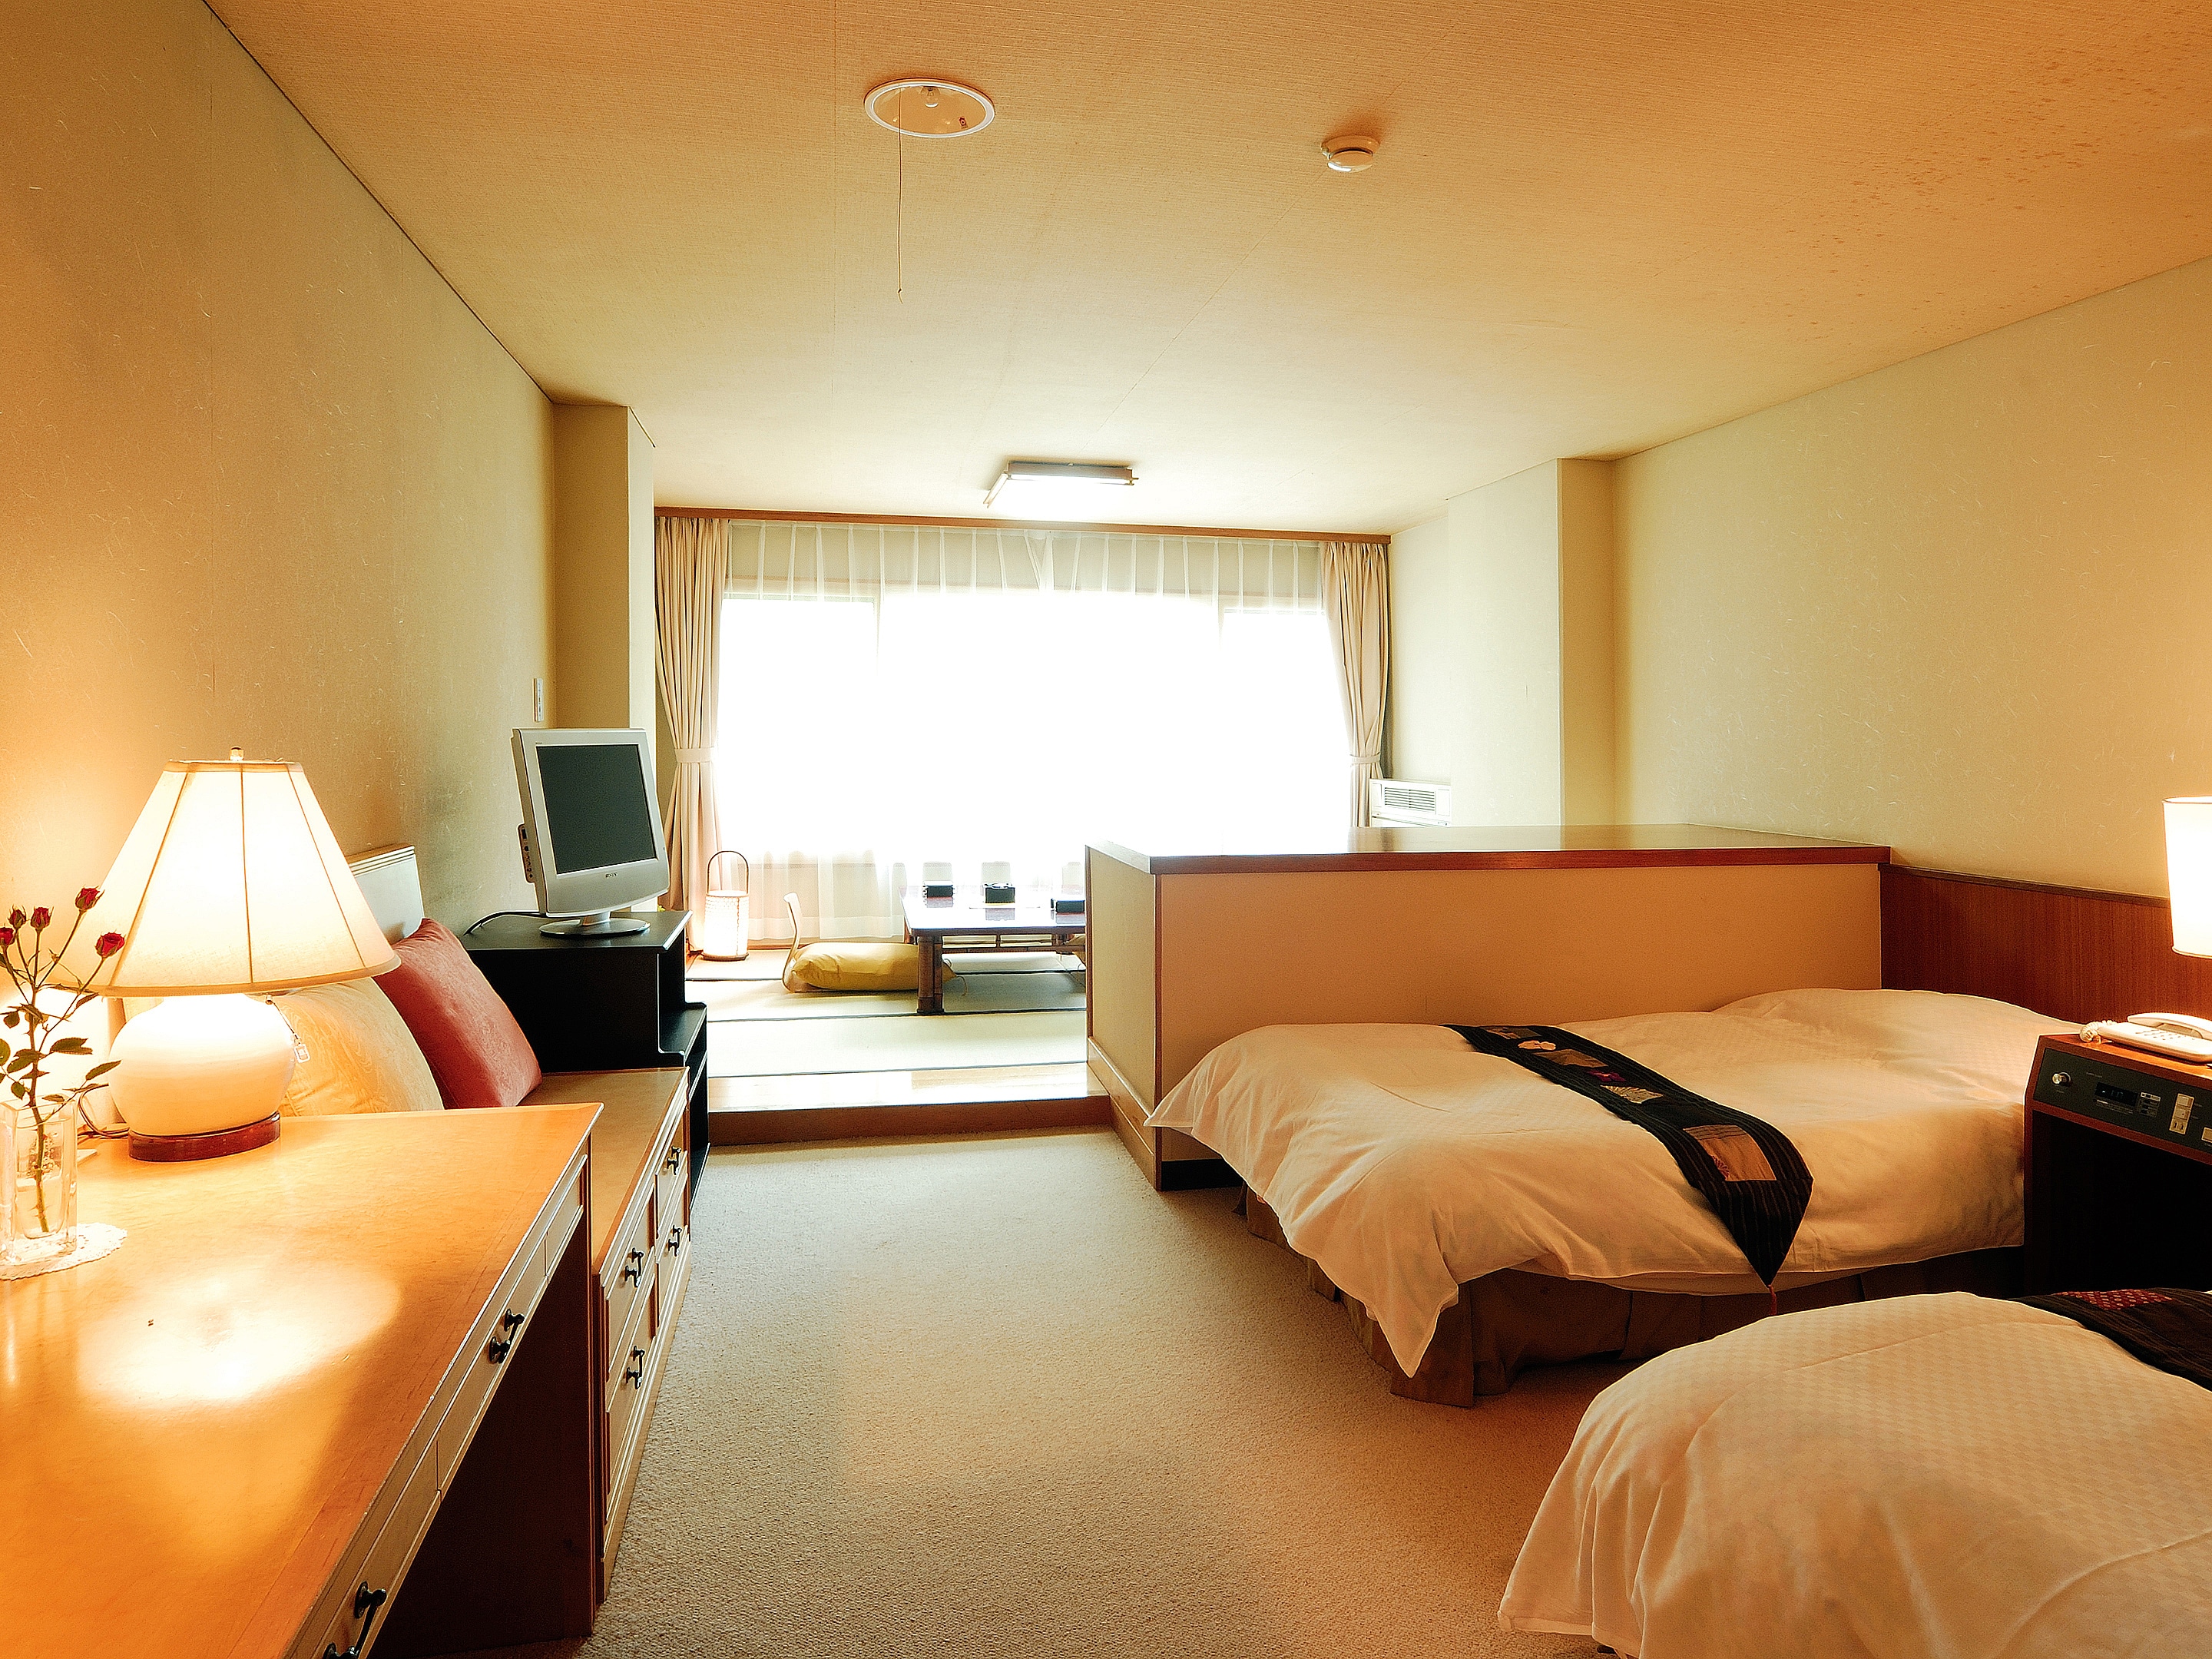 Kamar tamu umum 35㎡ Kamar bergaya Jepang 6 tikar tatami + tempat tidur twin